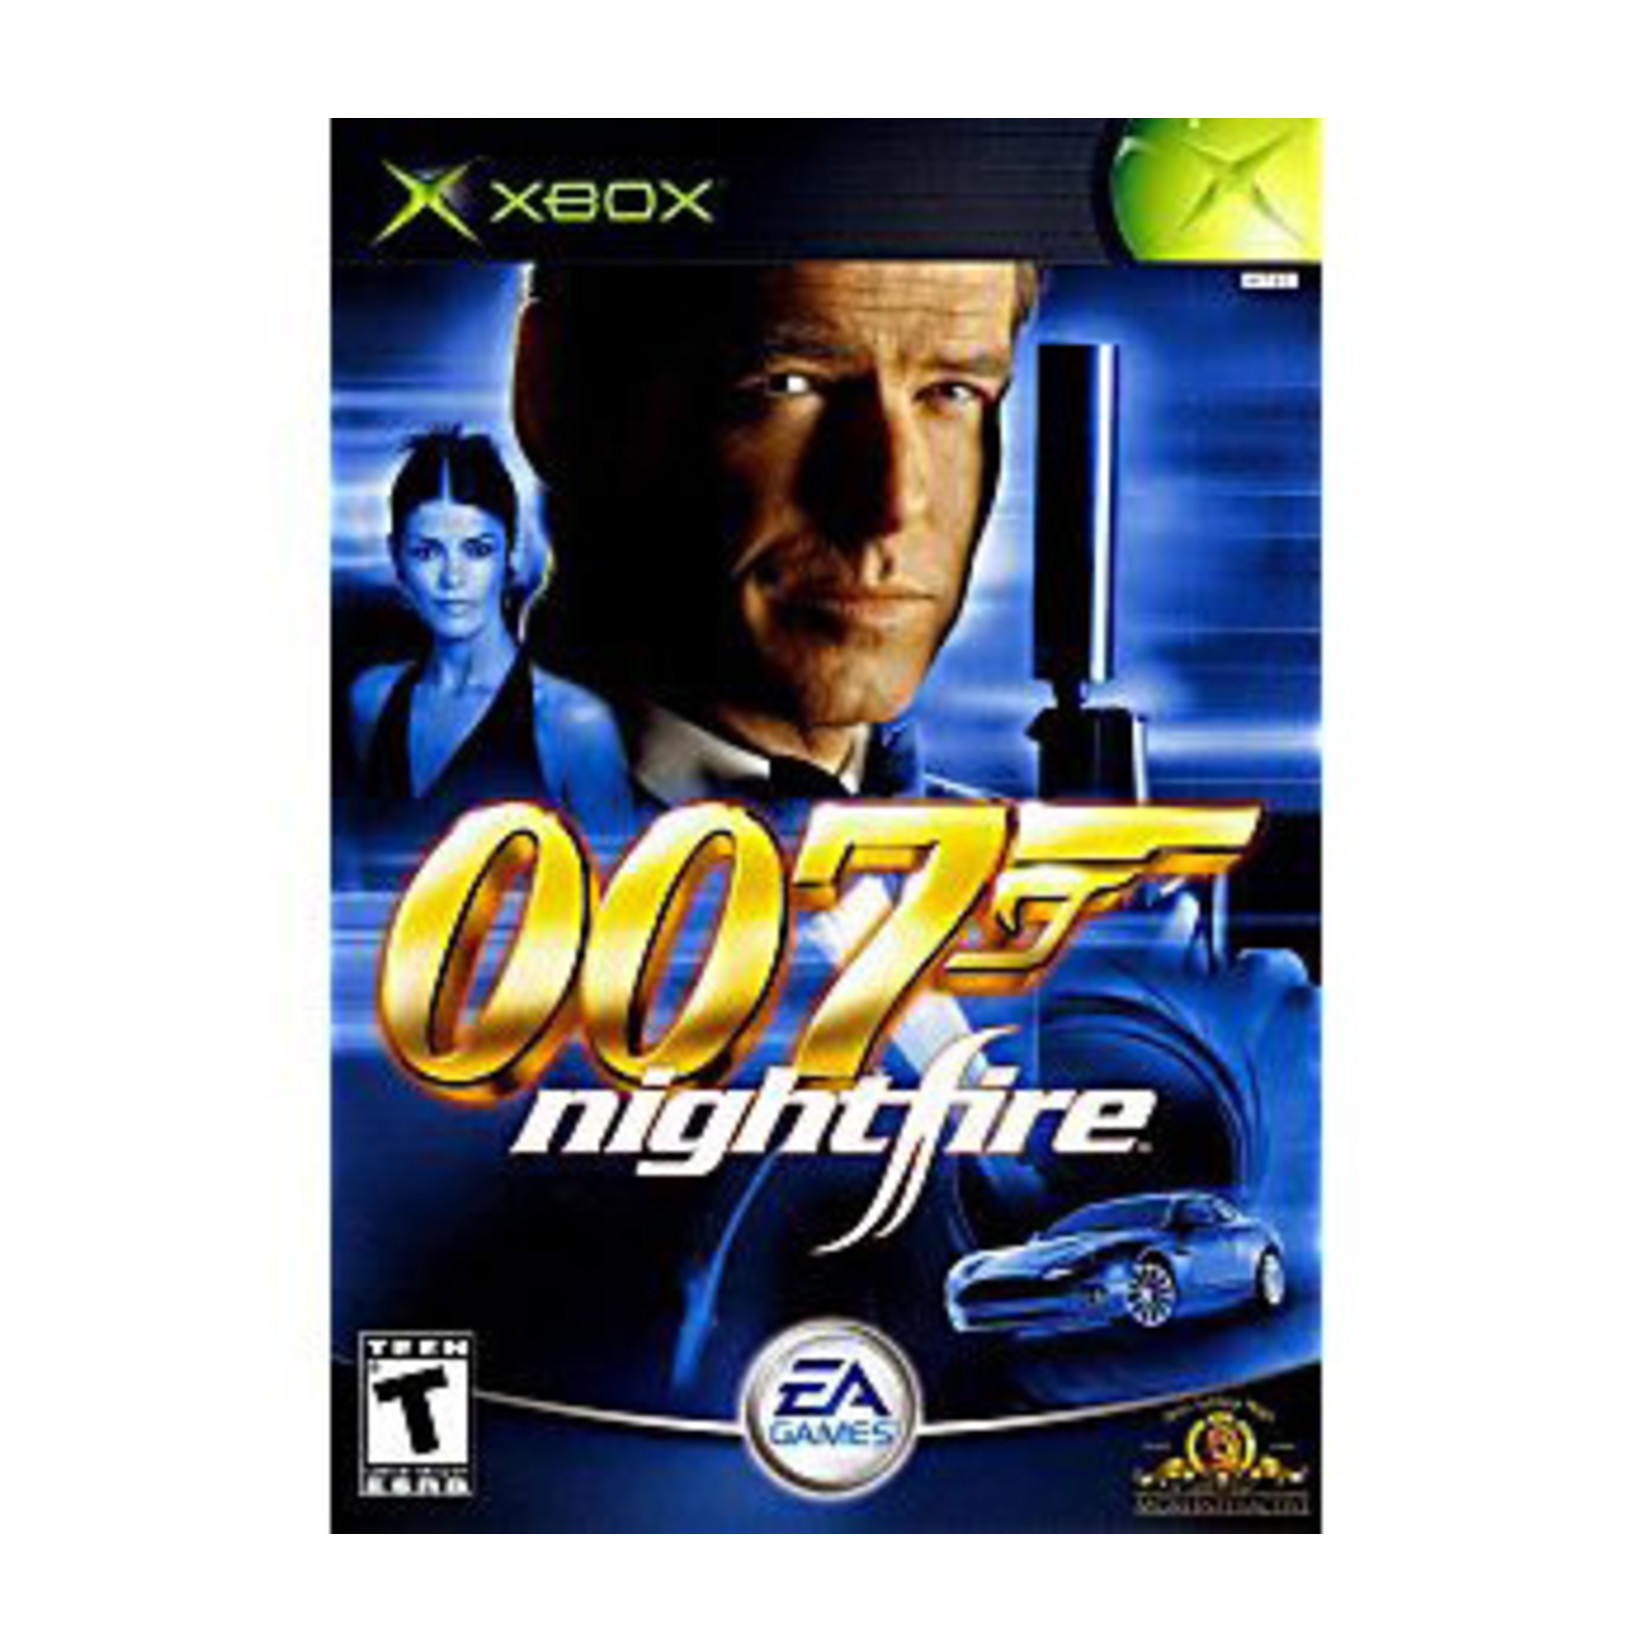 XBU-NIGHTFIRE 007